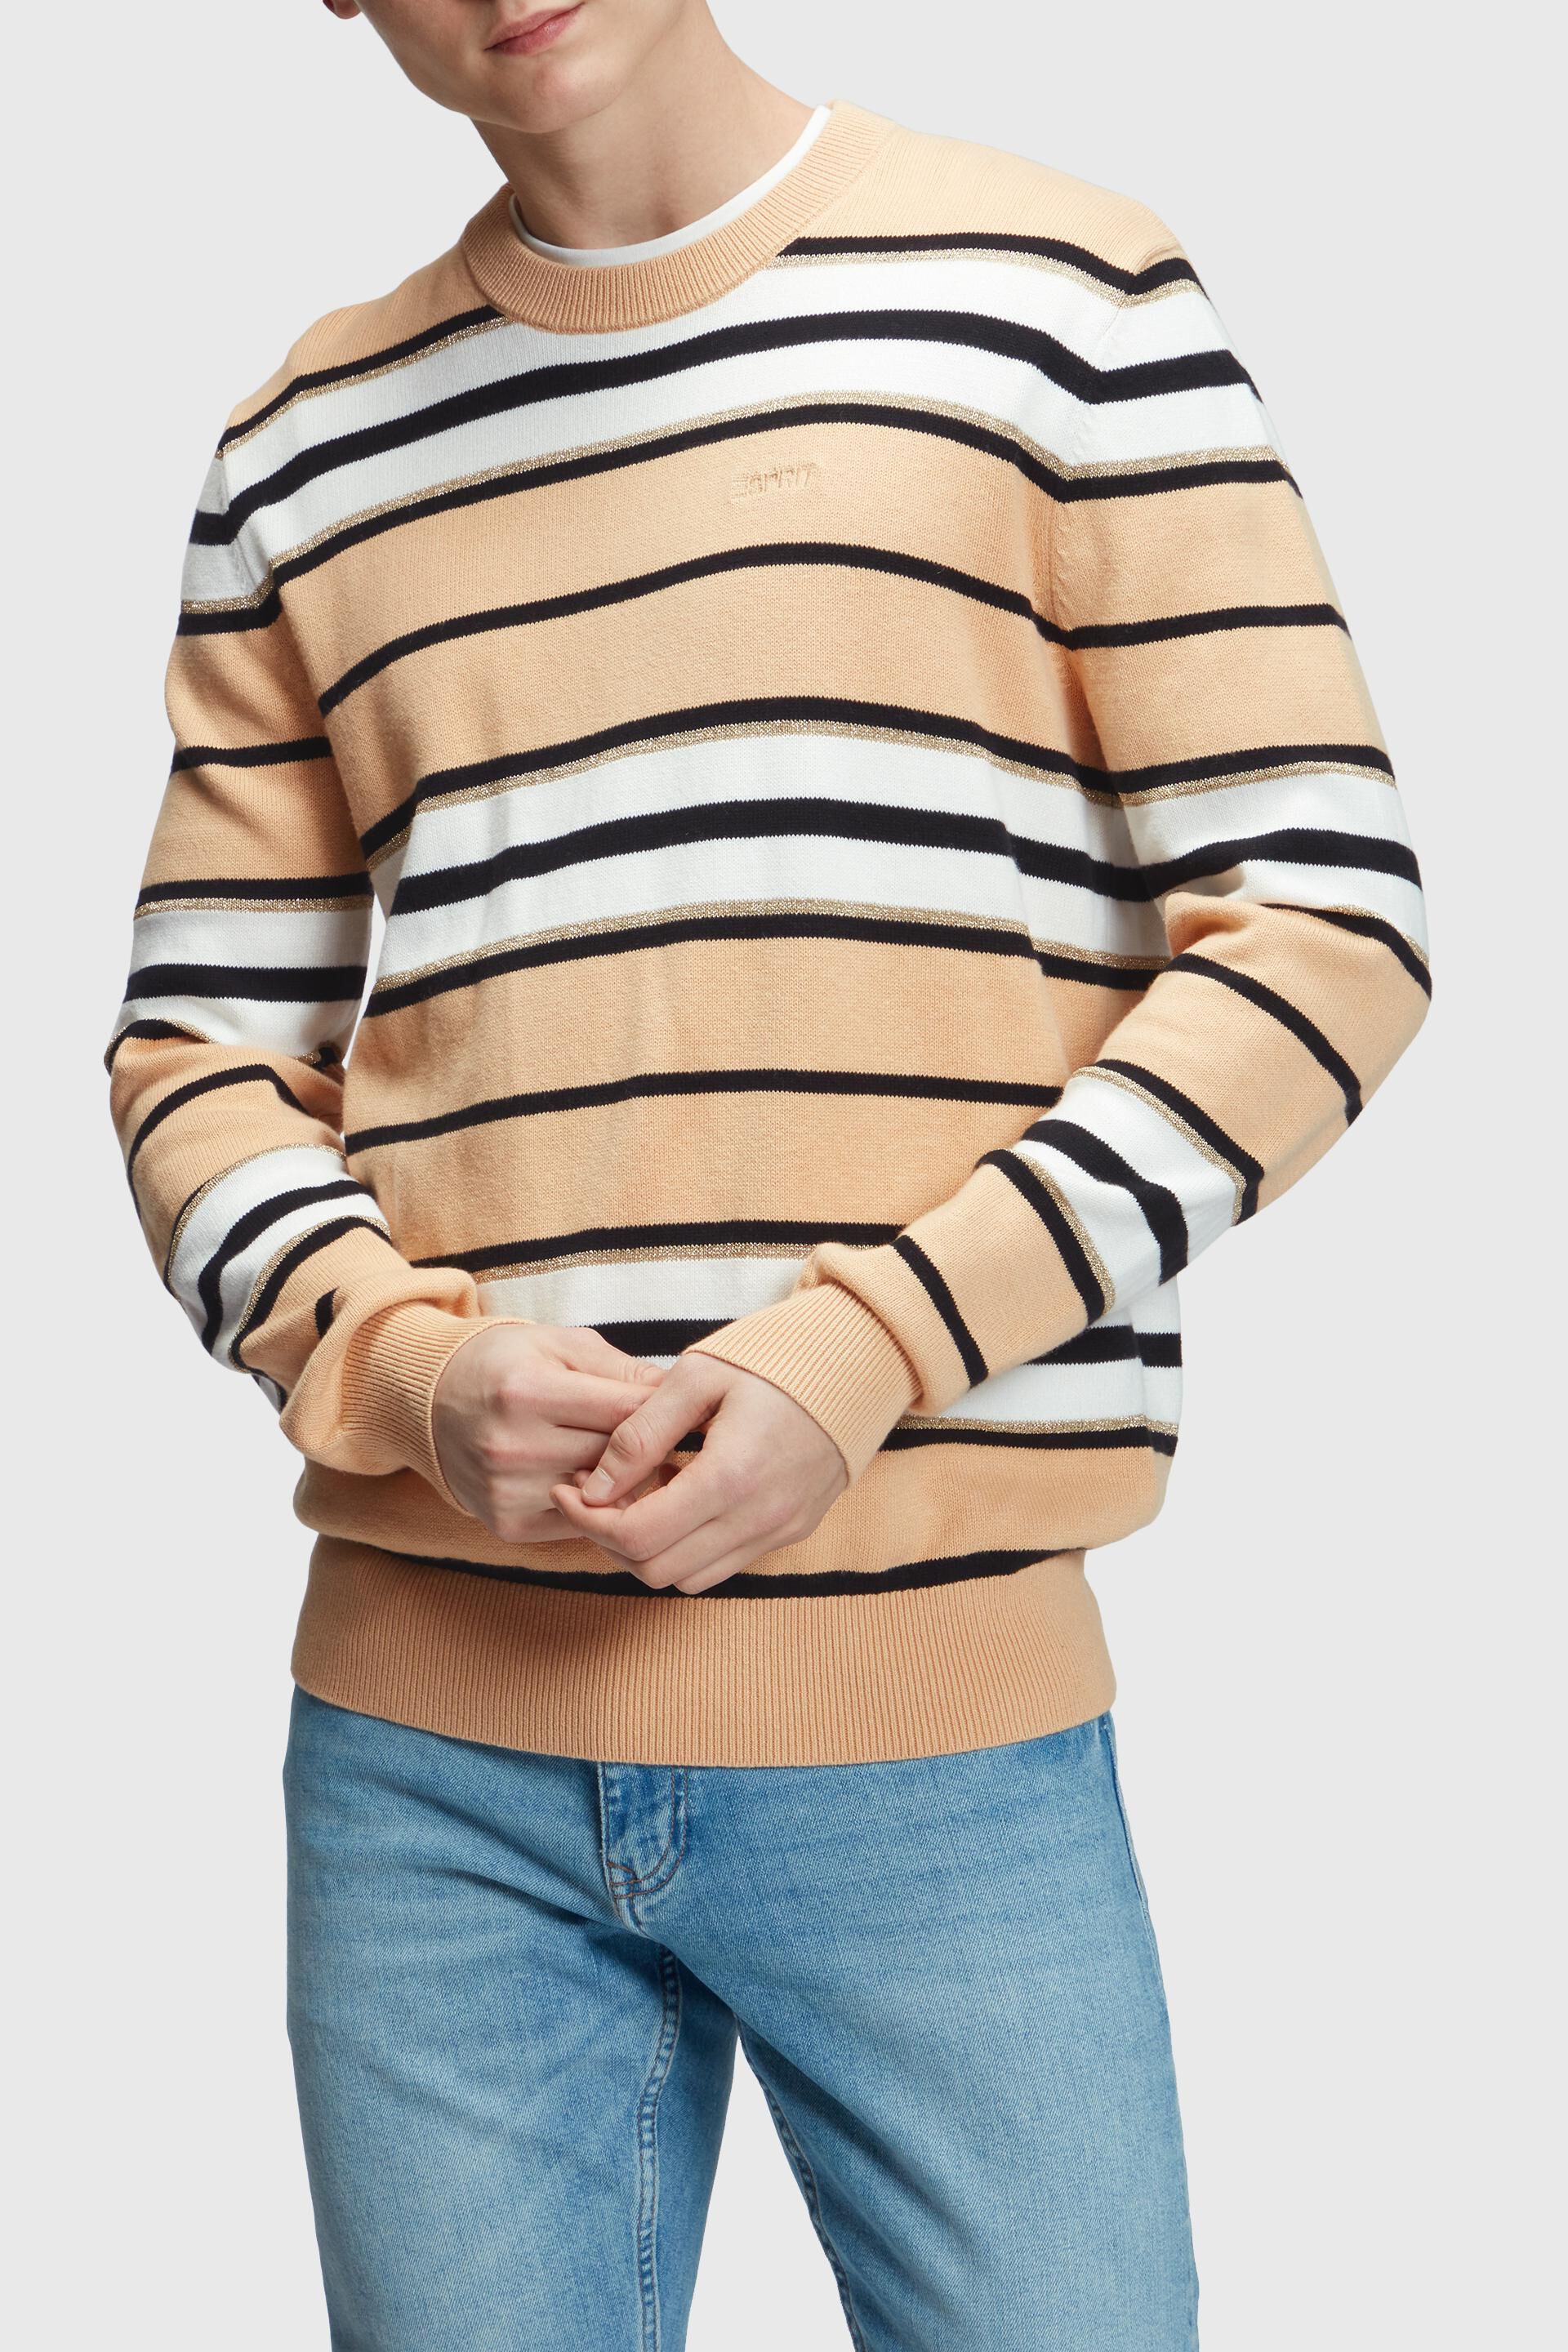 Esprit cashmere Striped jumper with